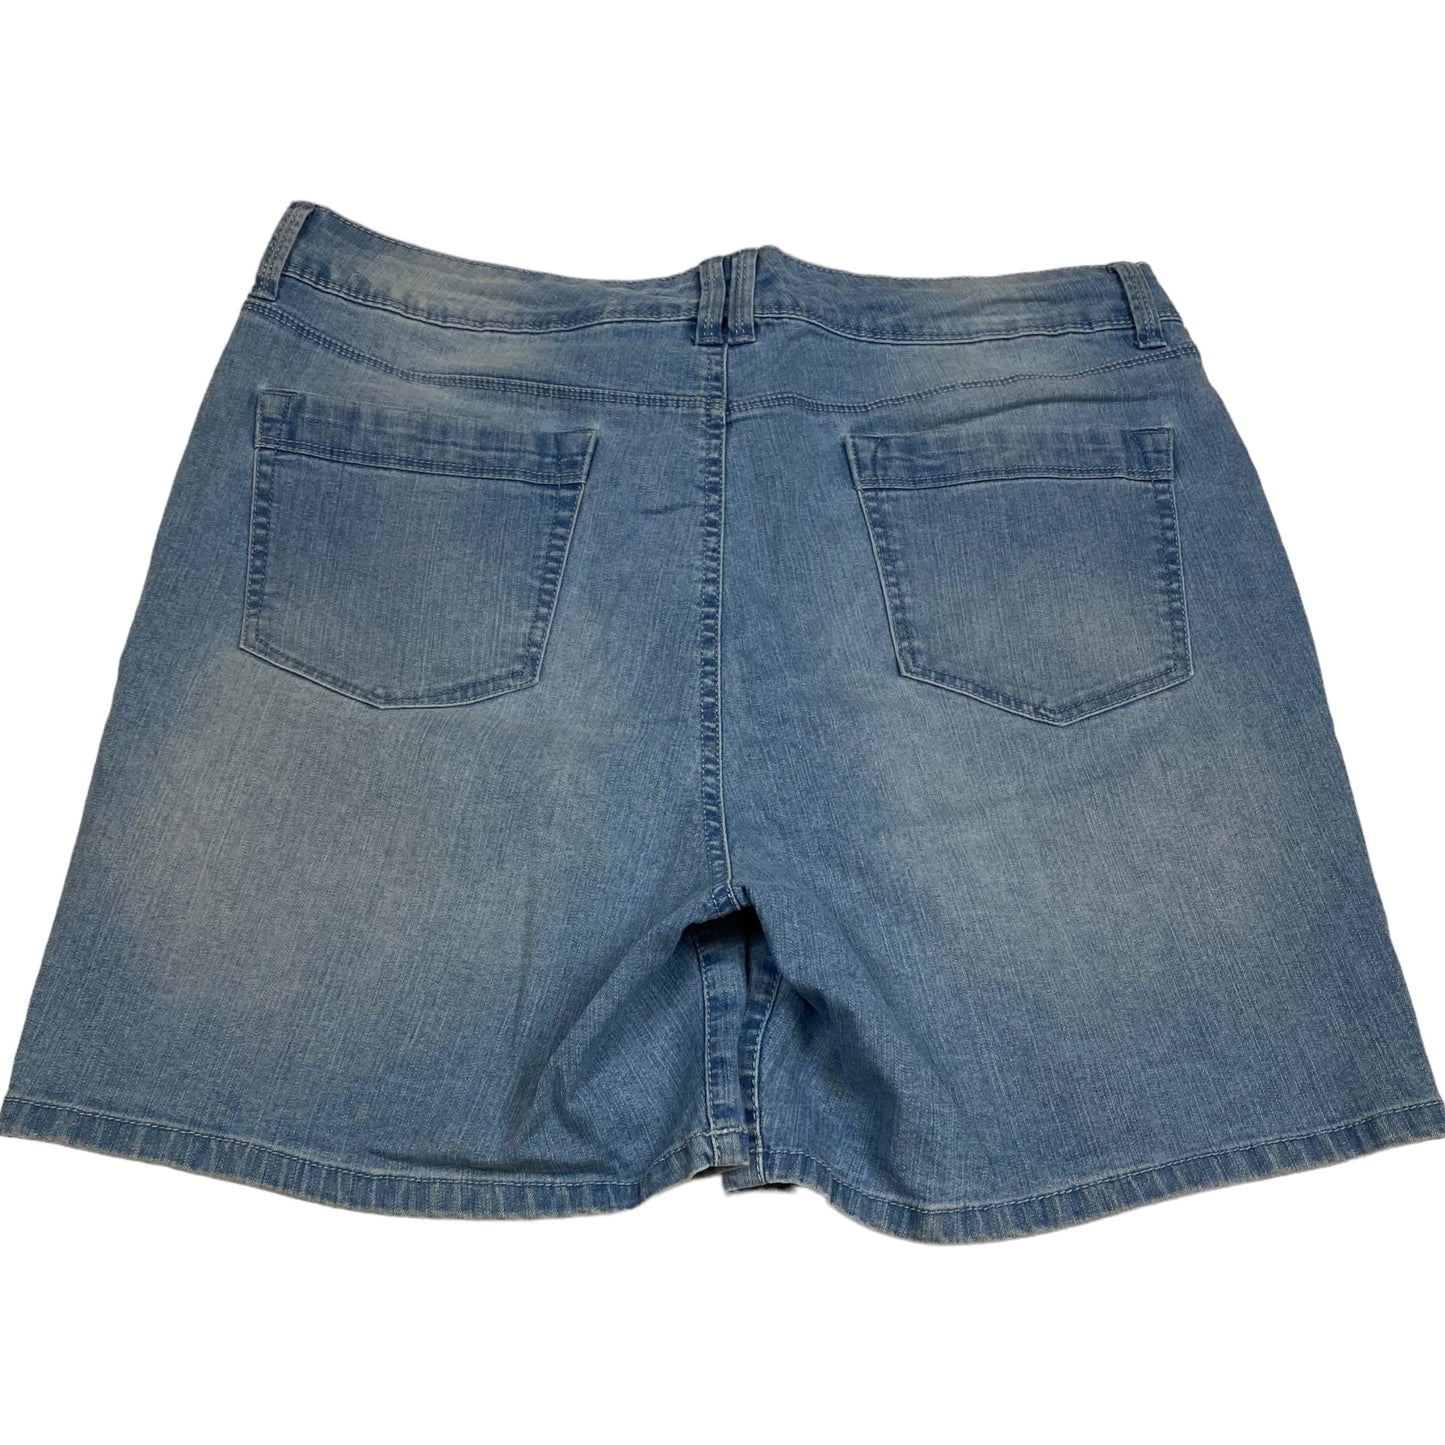 Shorts By Bandolino  Size: 14